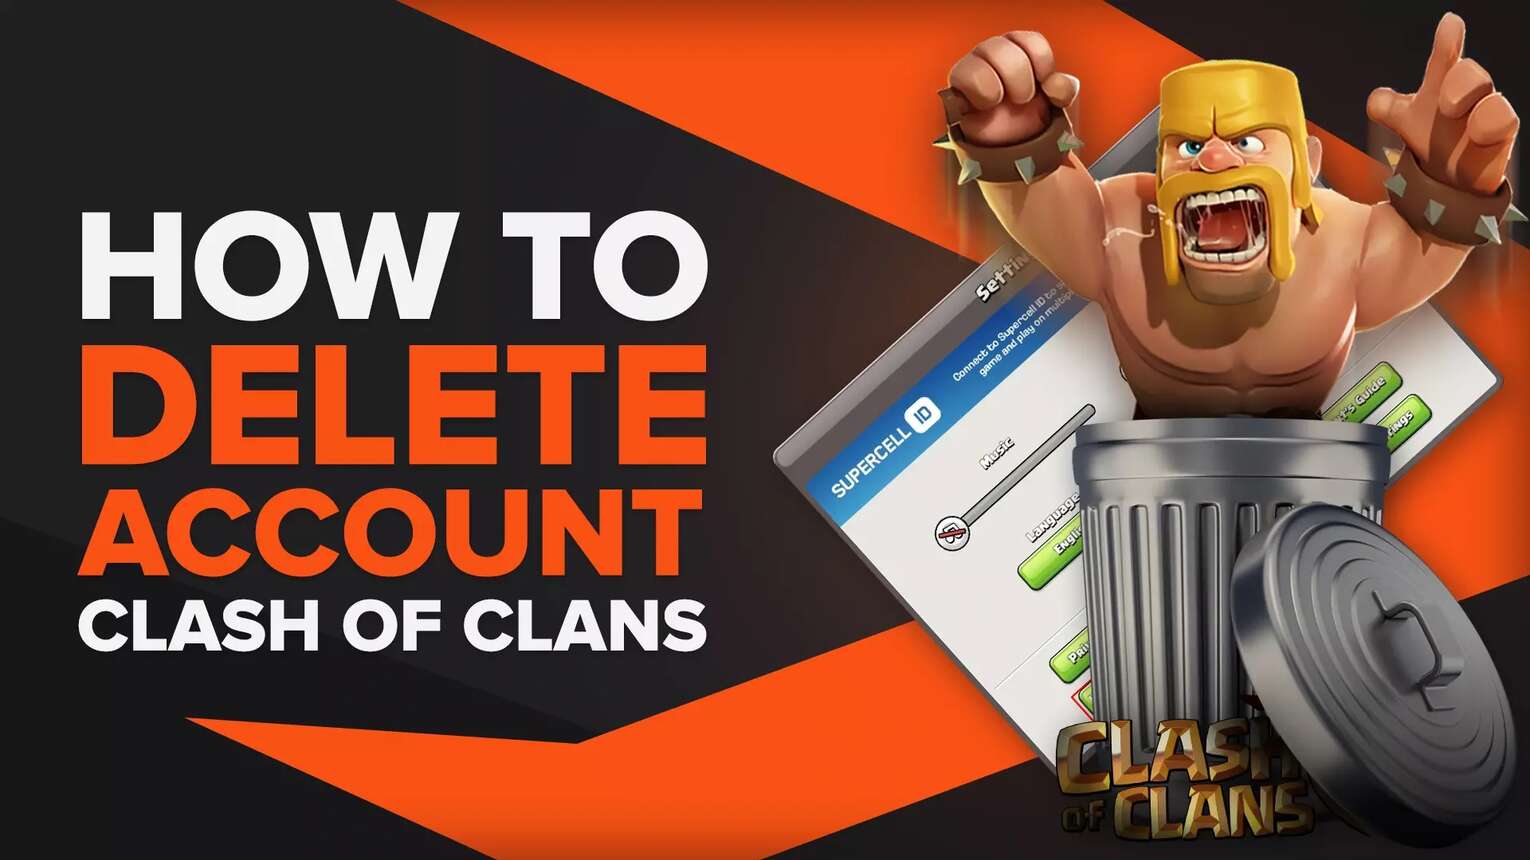 How To Delete Clash of Clans Account? [2 Easy Methods]